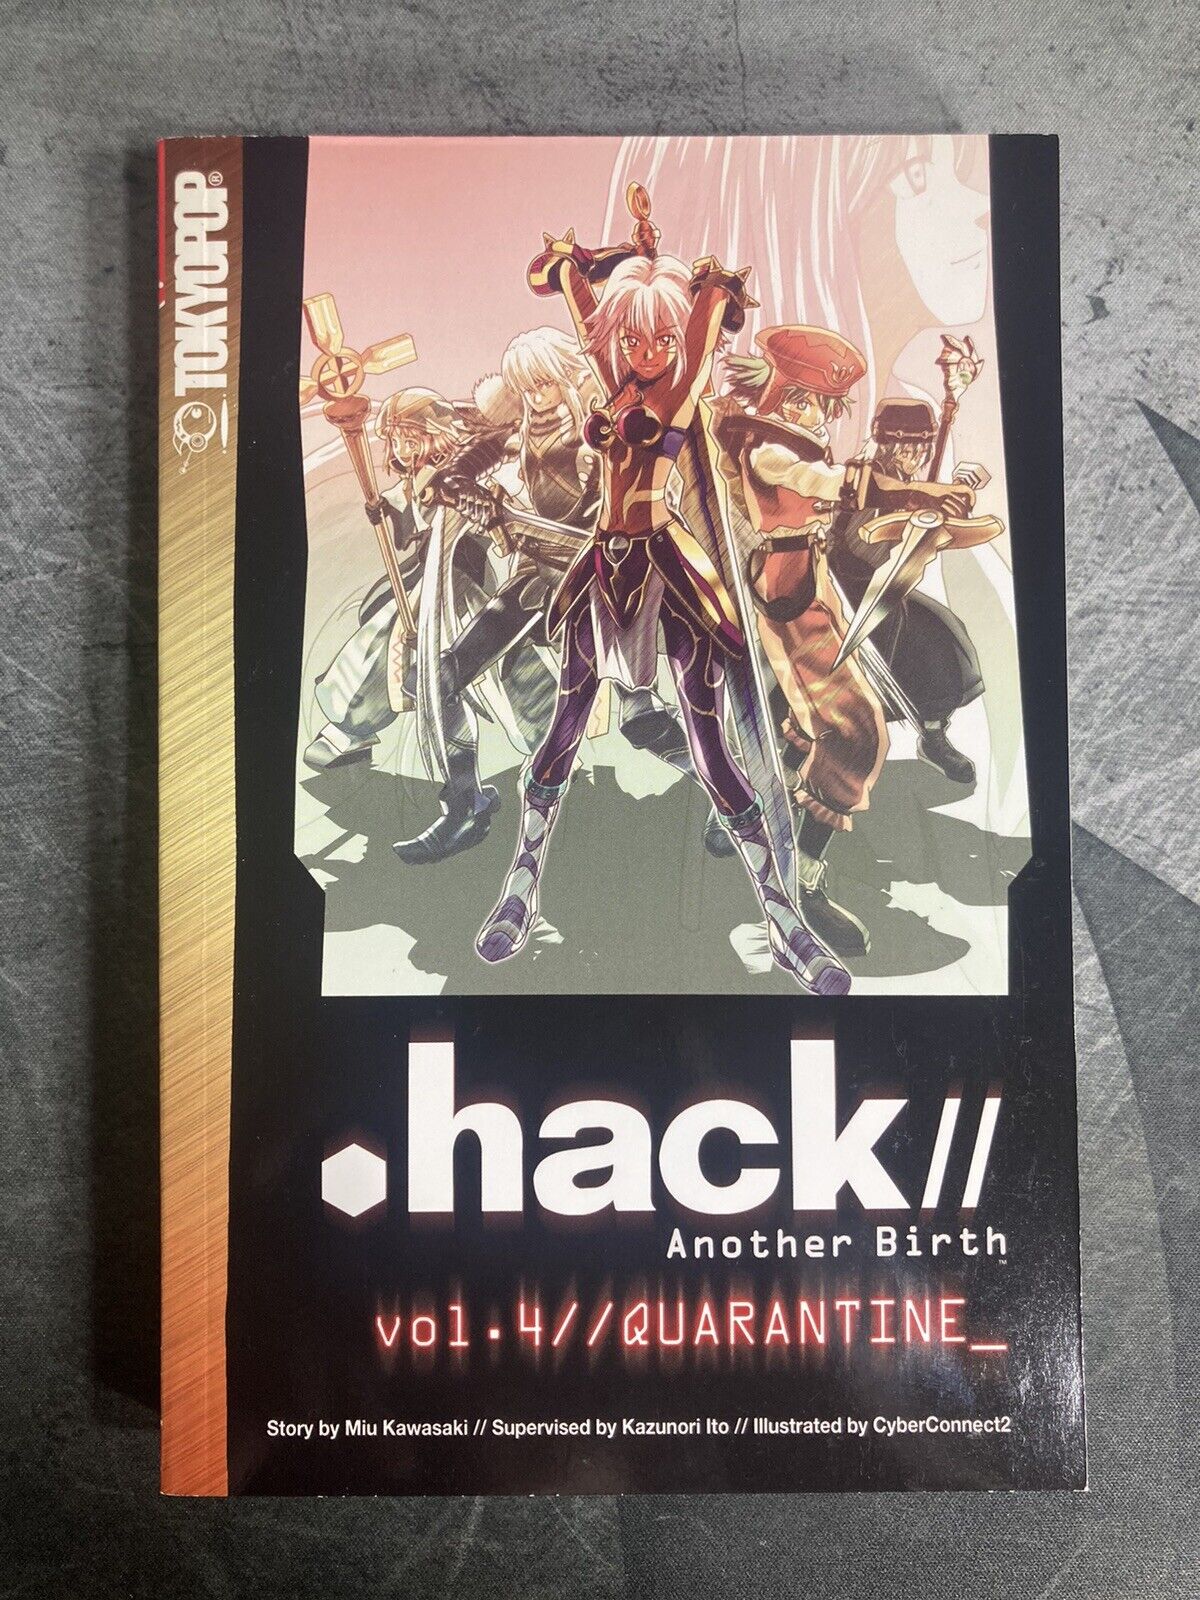 .hack Another Birth Vol 4 QUARANTINE